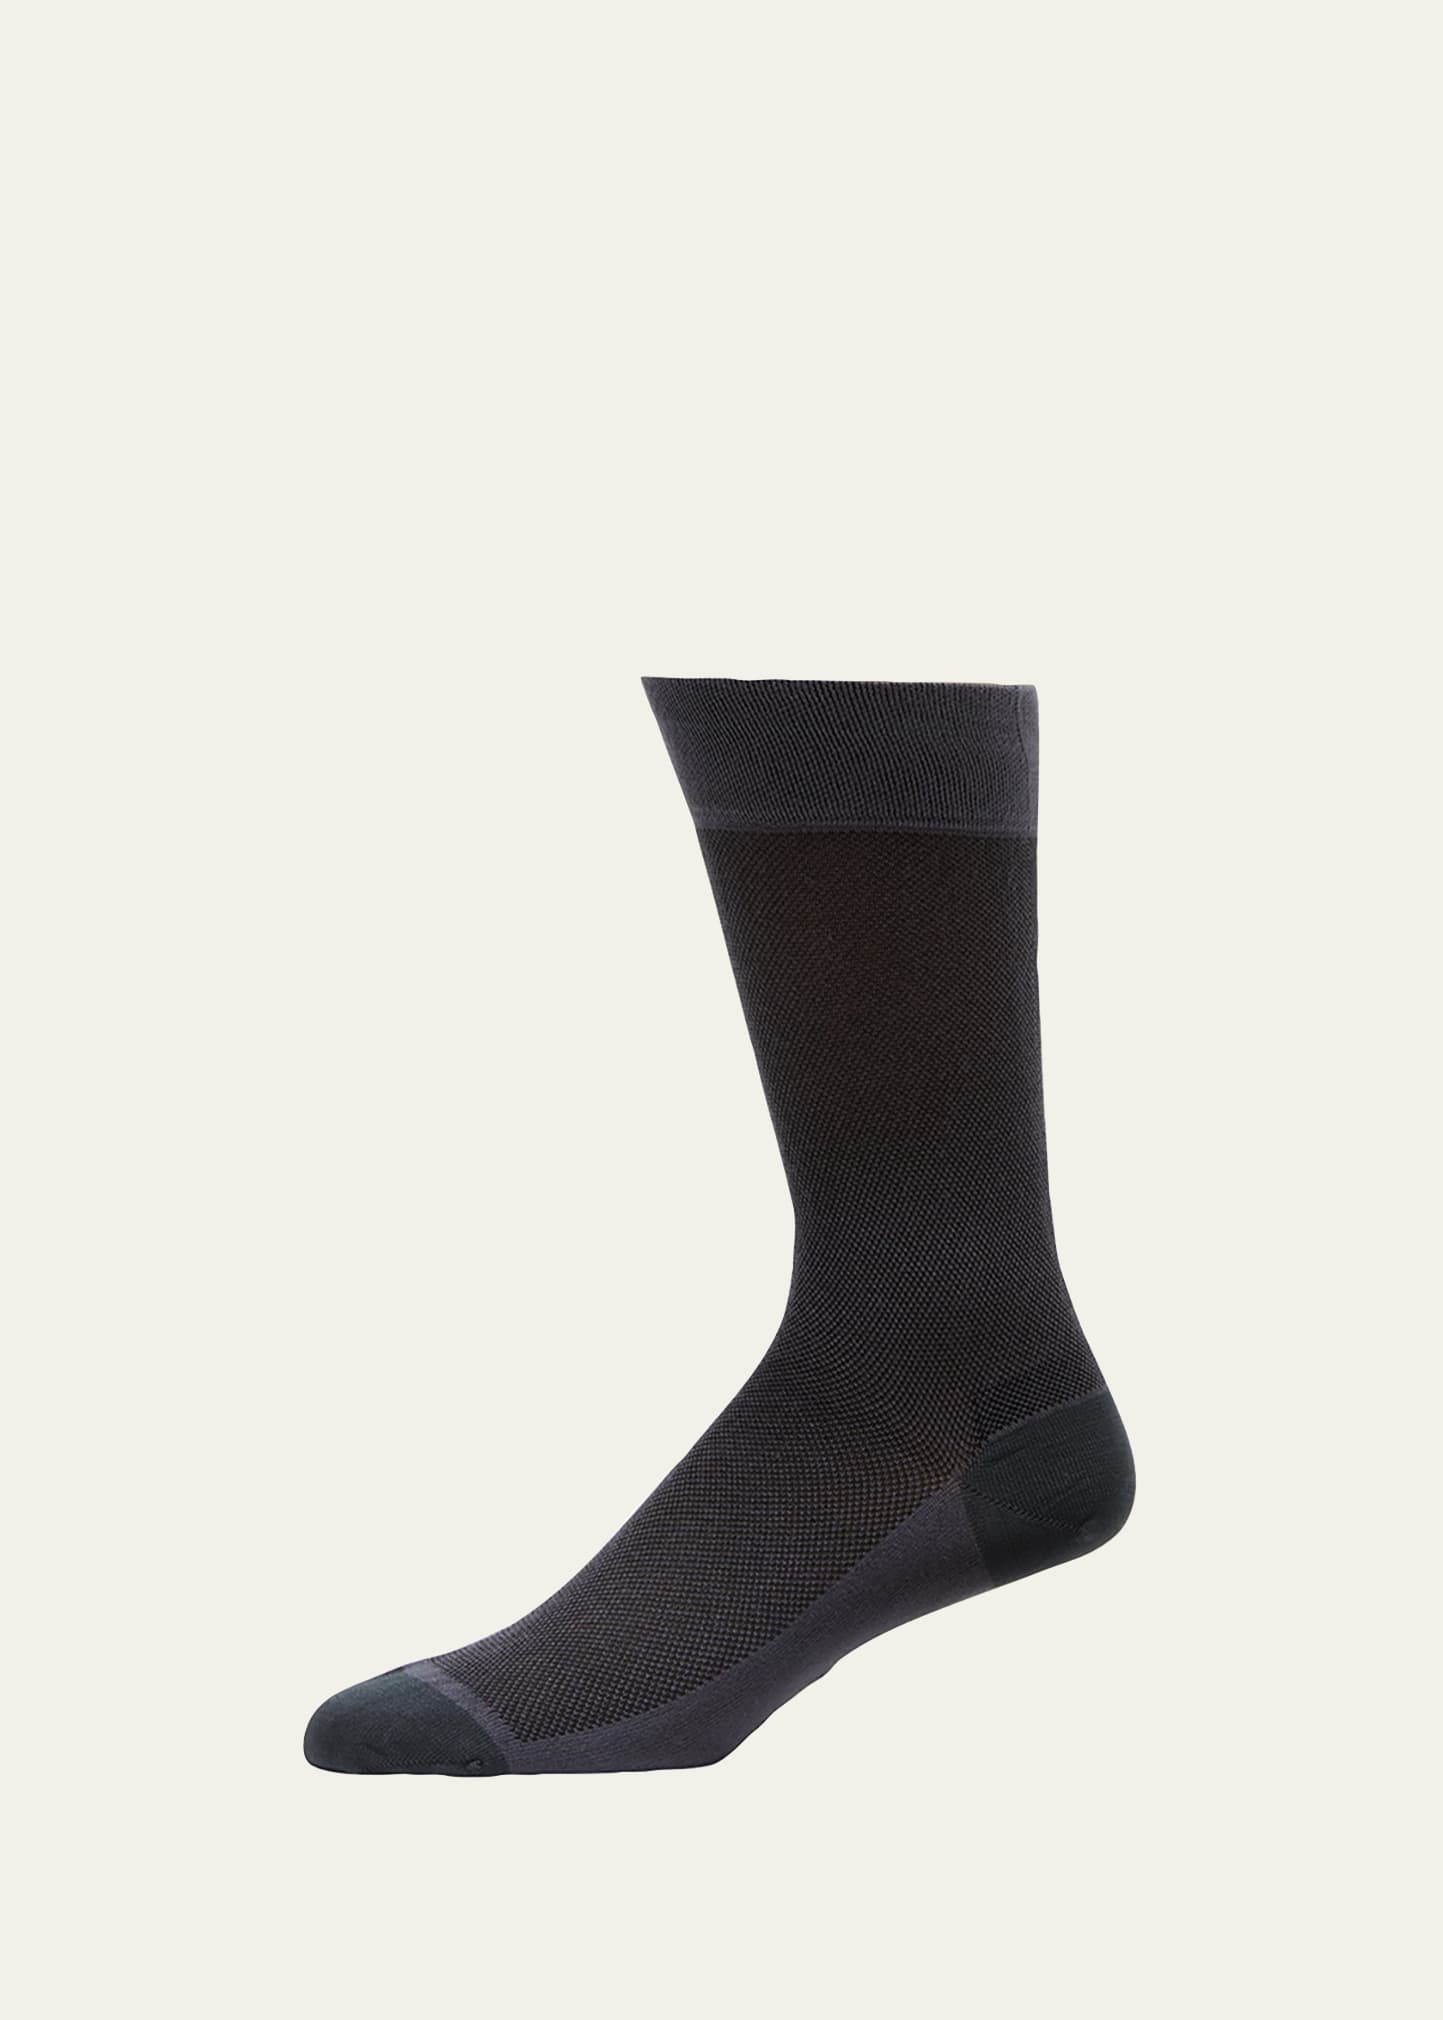 Marcoliani Men's Modal Pique Mid-Calf Socks